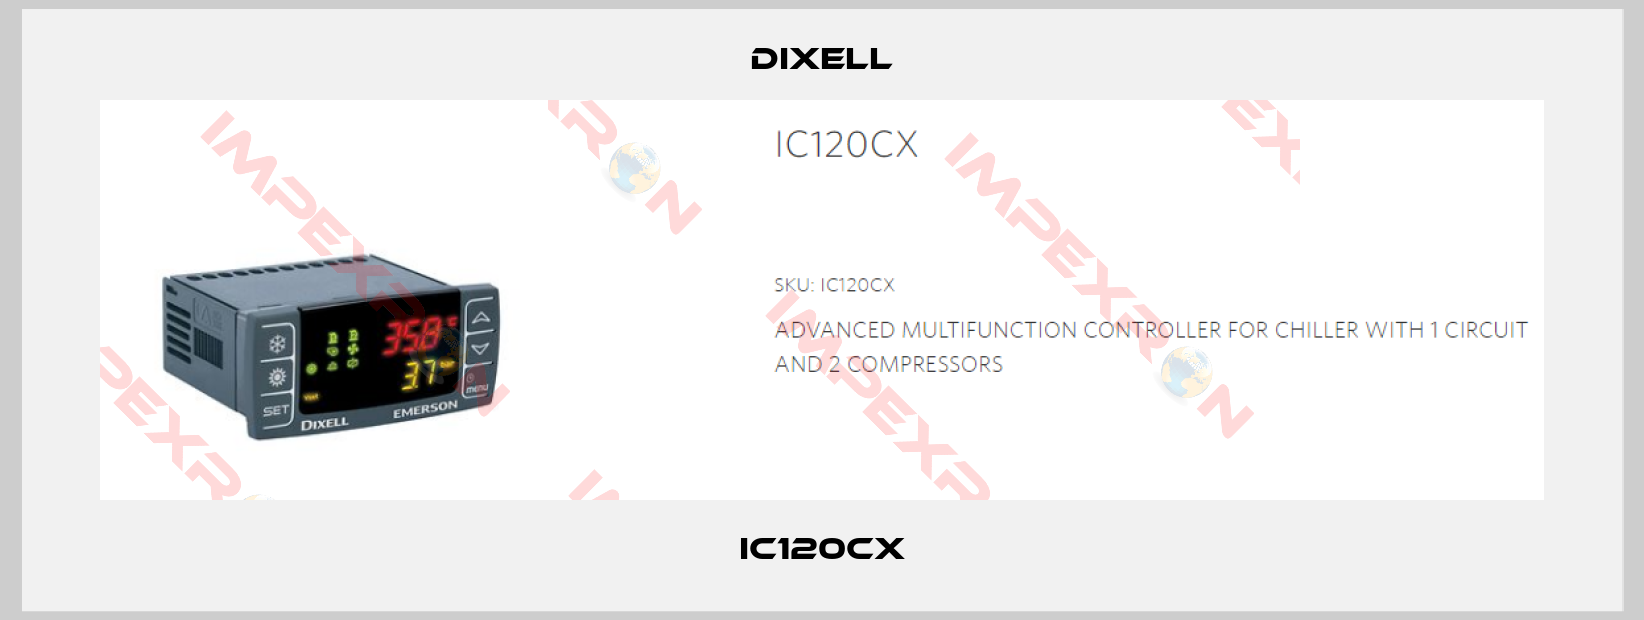 Dixell-IC120CX